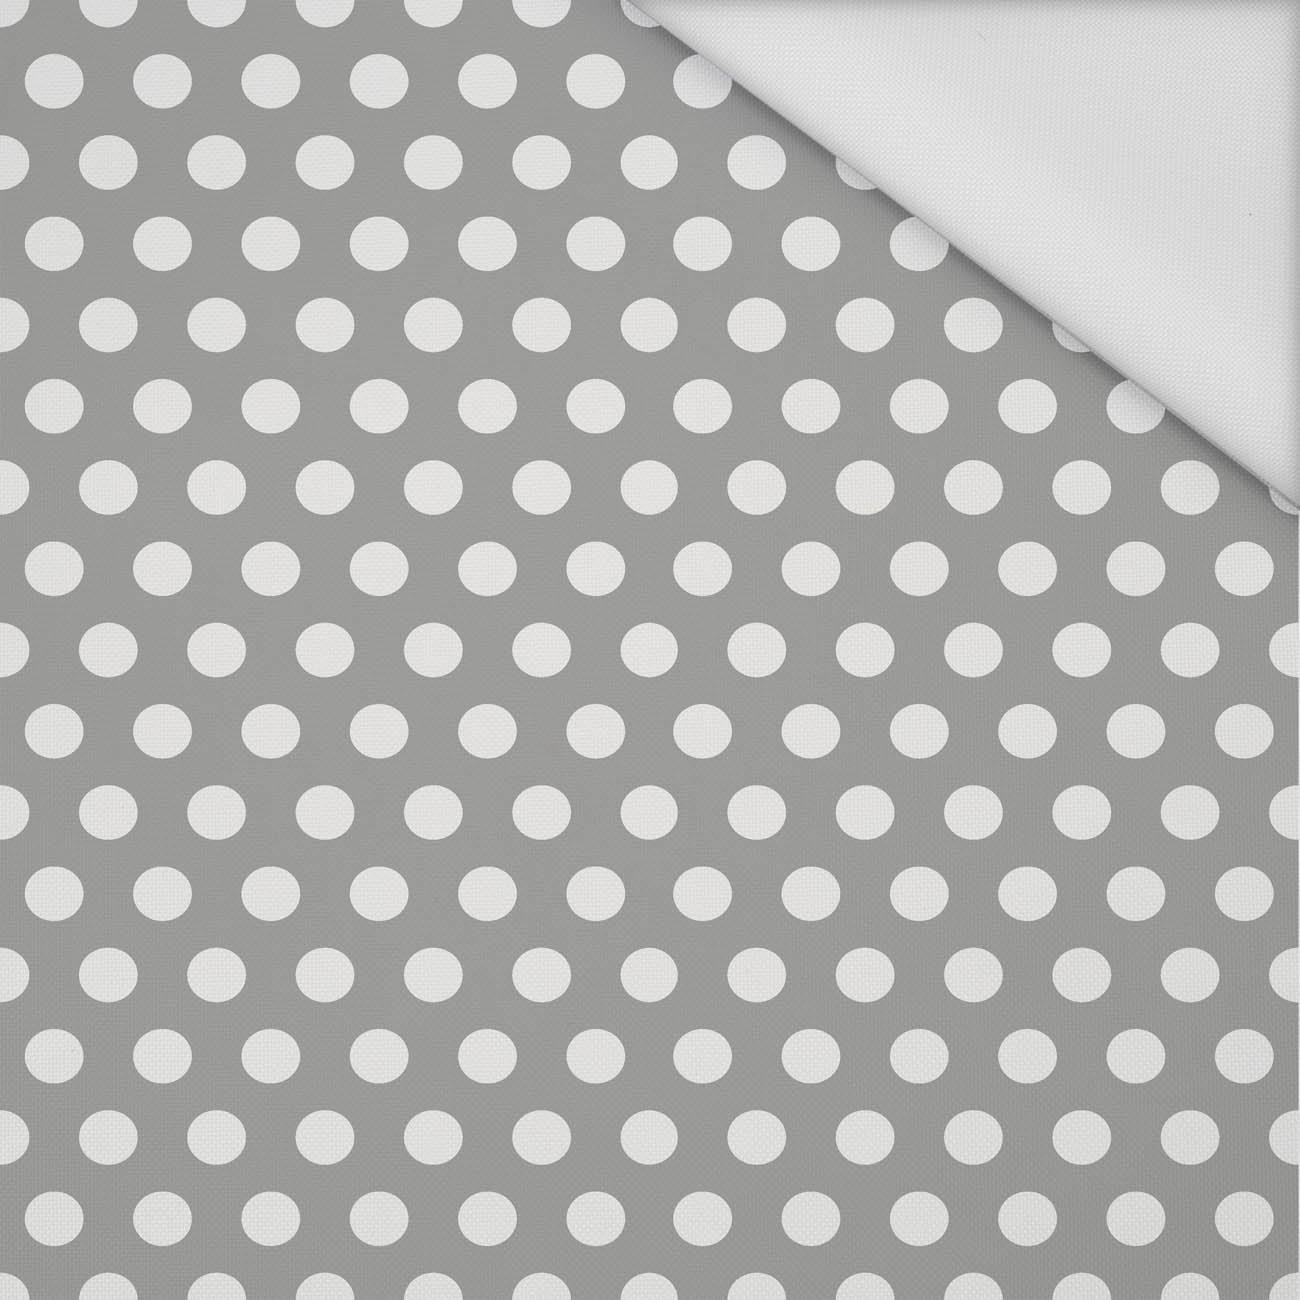 WHITE DOTS / grey  - Waterproof woven fabric